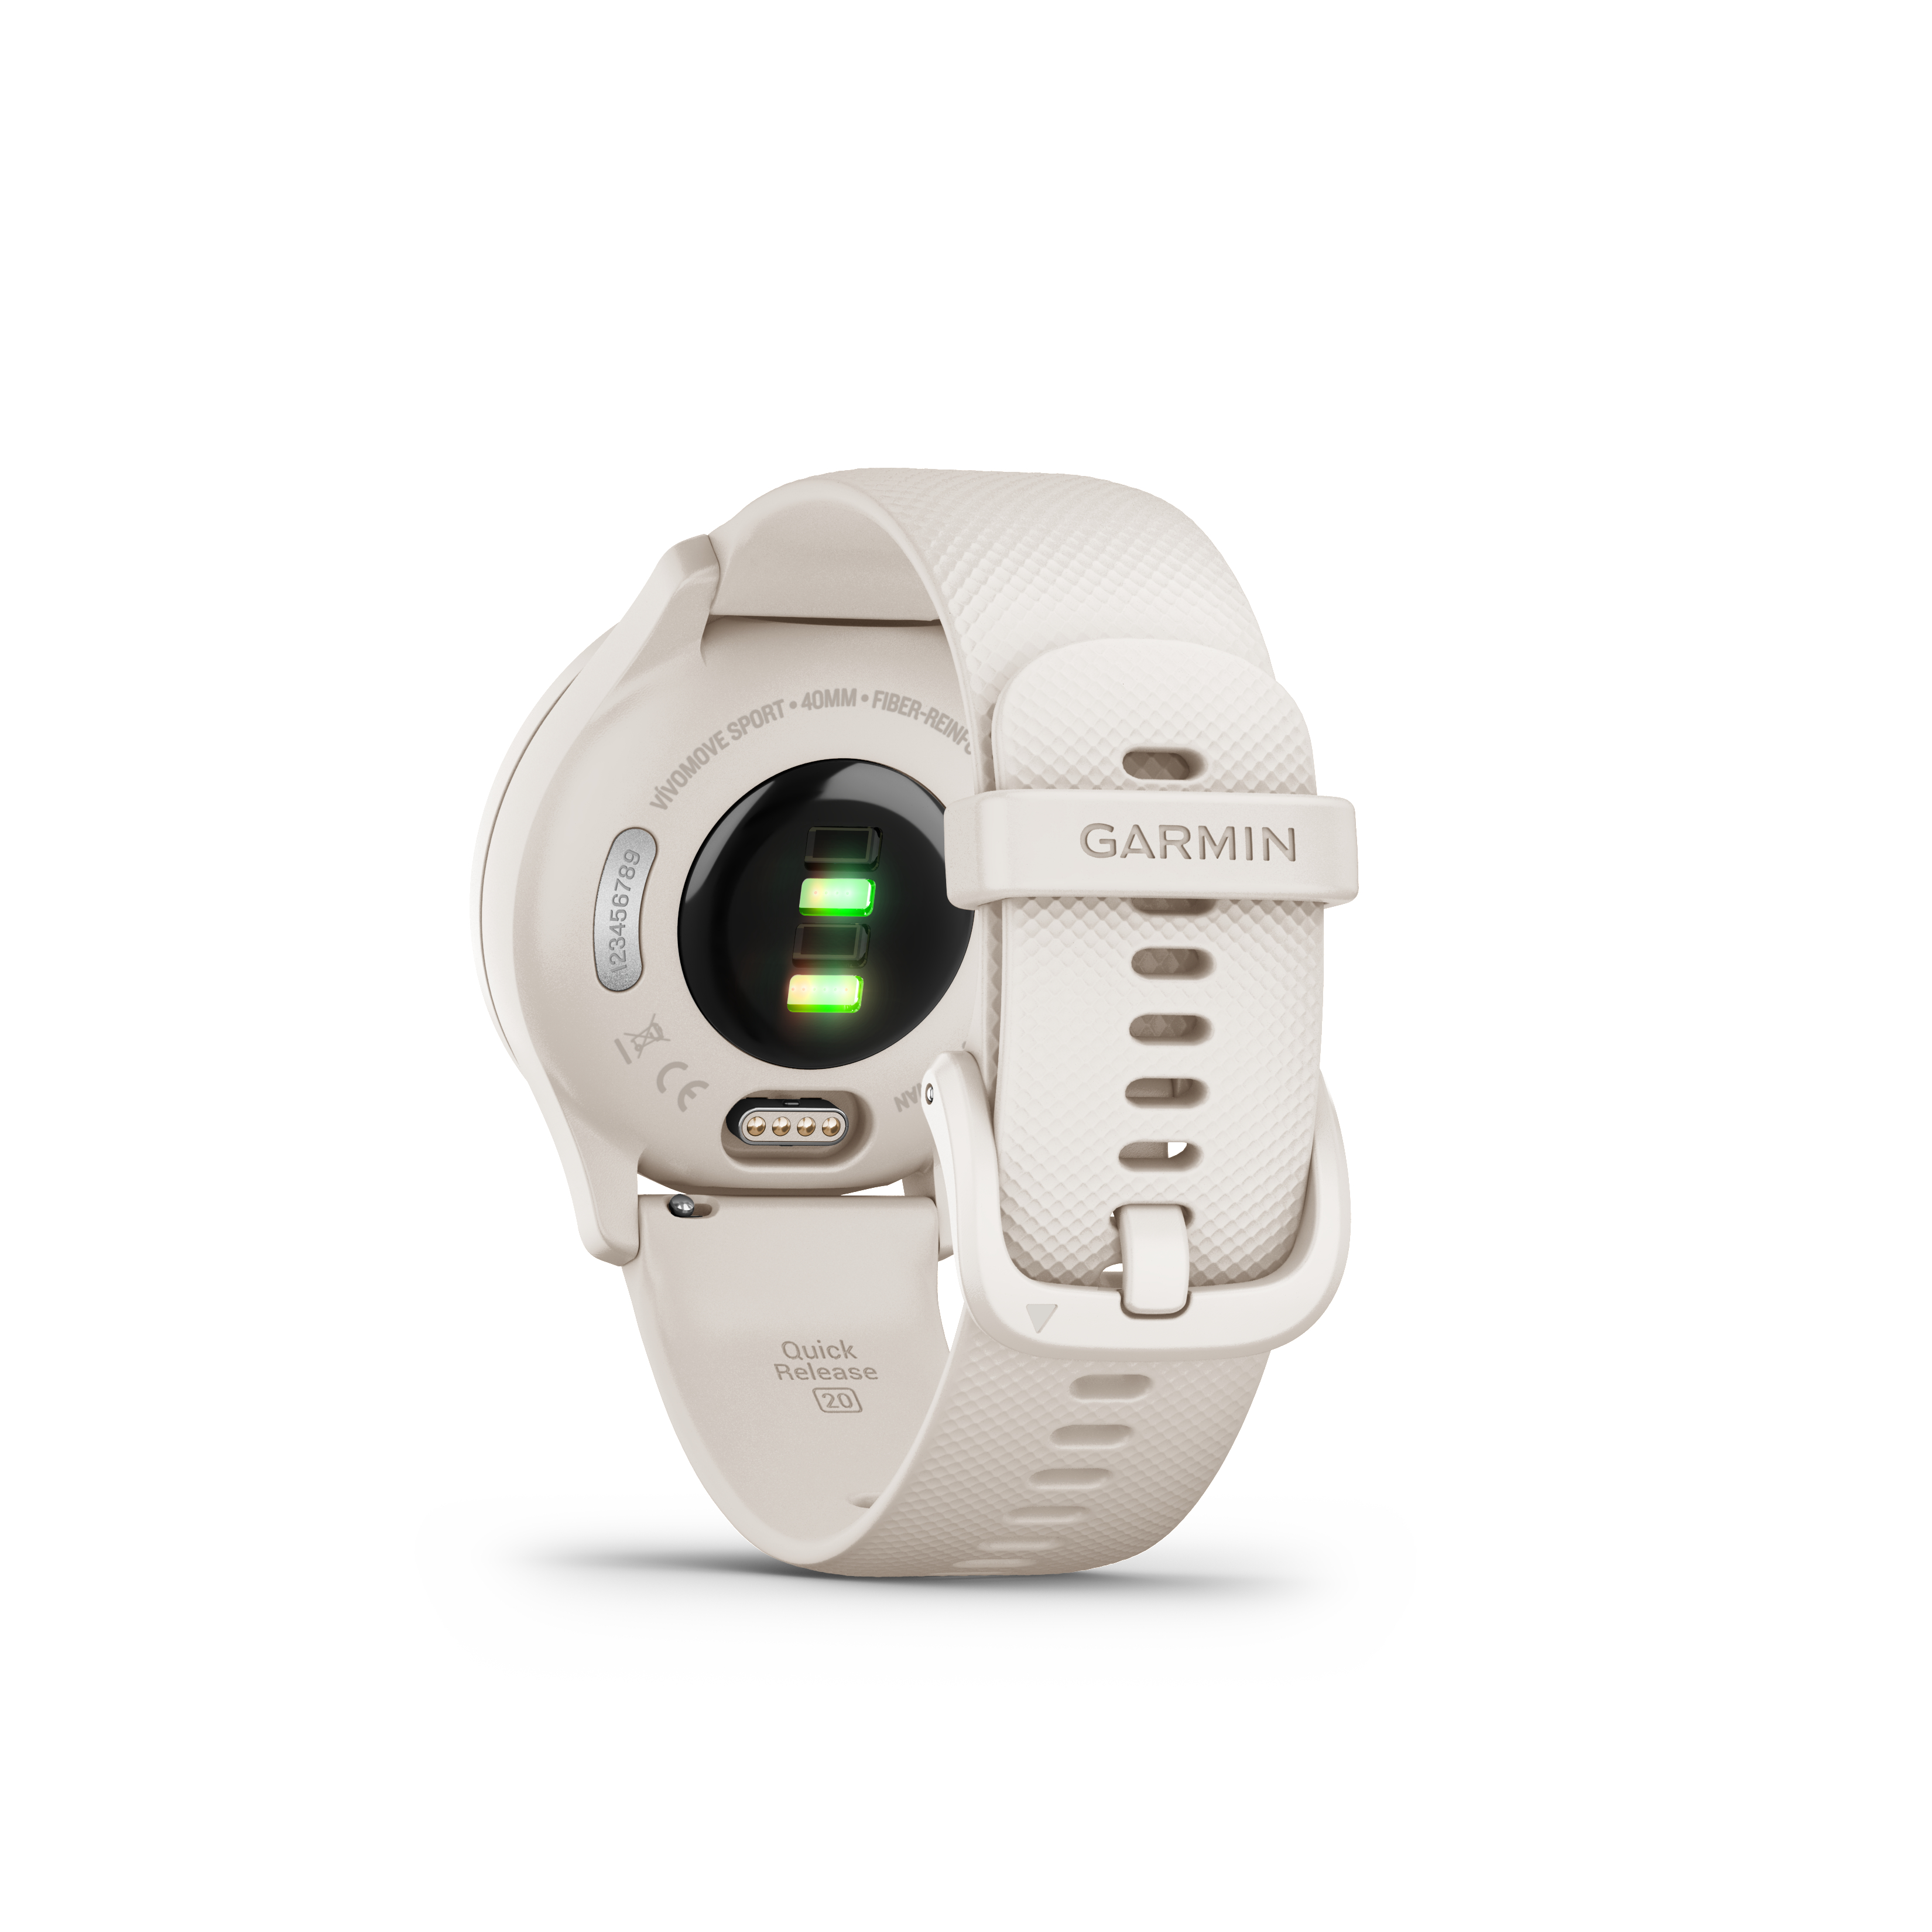 GARMIN Faserverstärktes Polymer Smartwatch mm, Elfenbein/Perlgold 125-190 Garmin Silikon, Vivomove